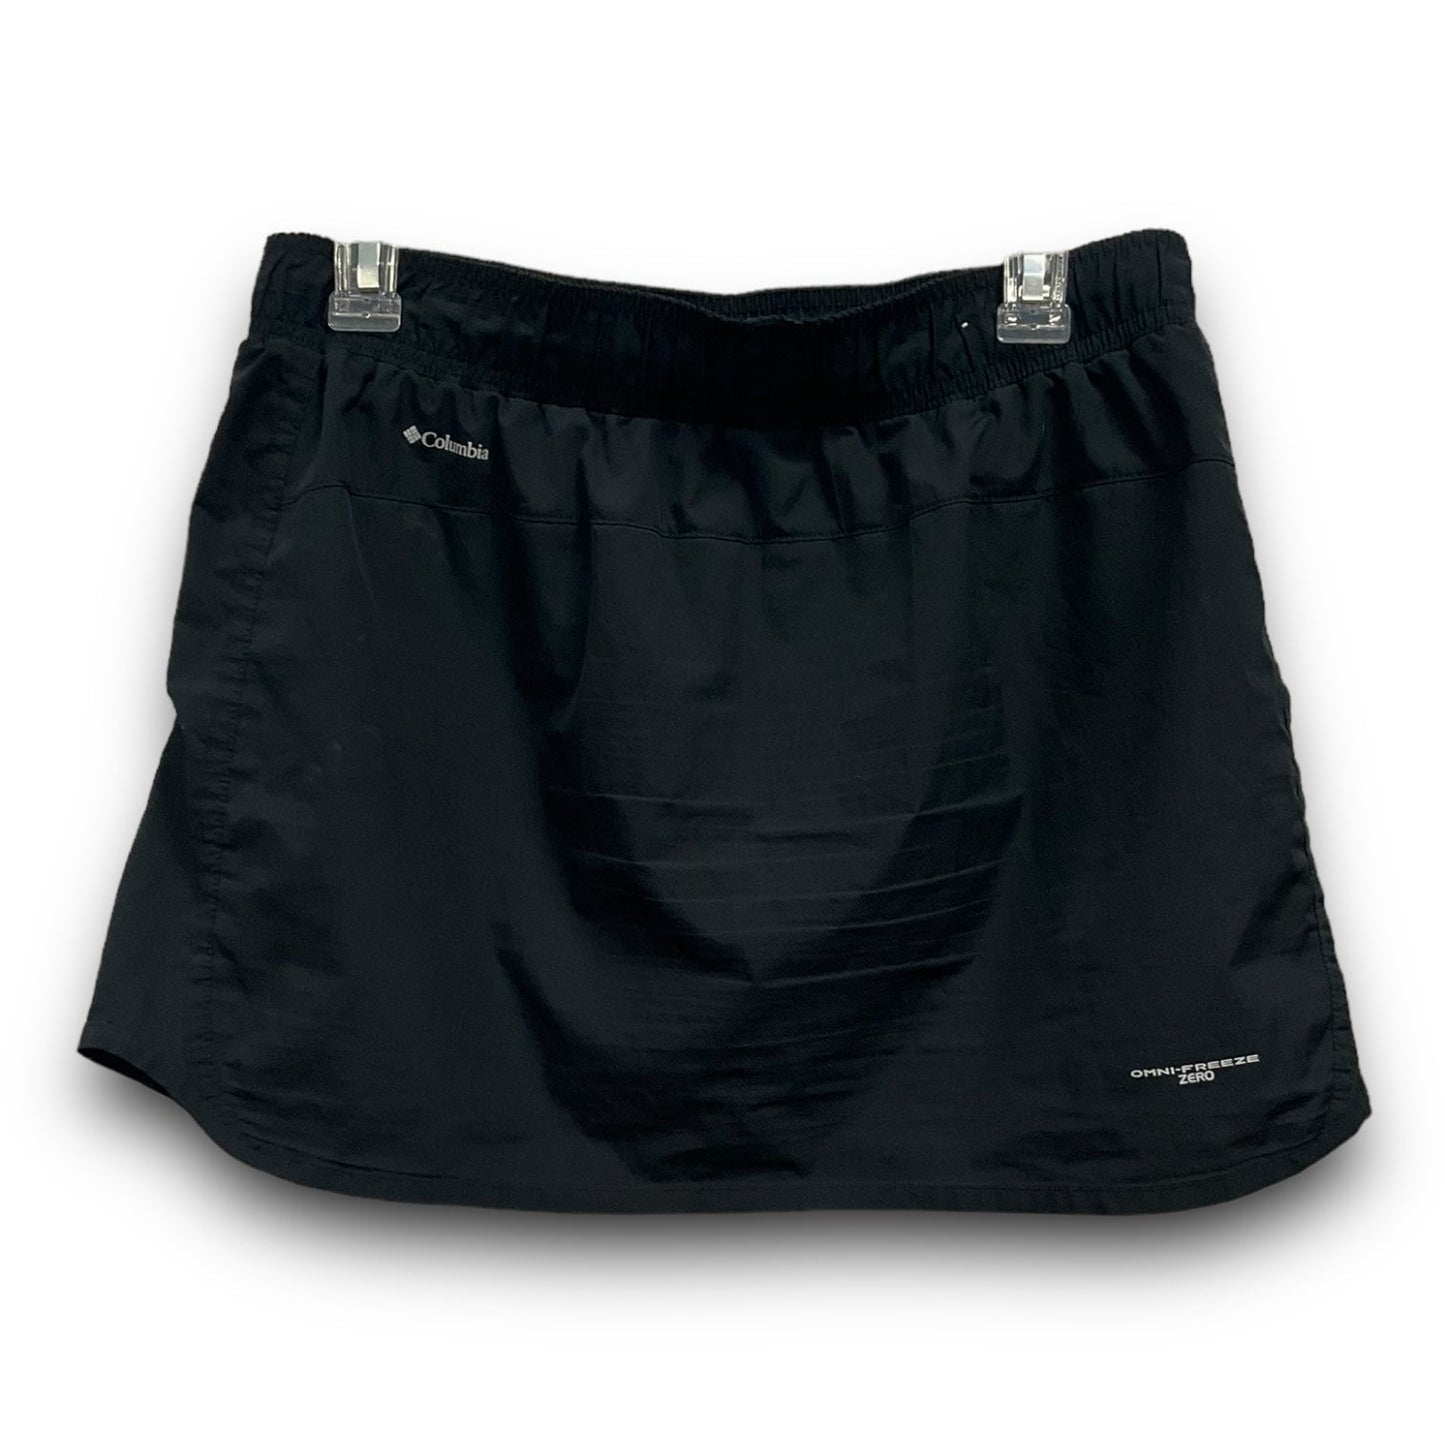 Black Athletic Shorts Columbia, Size M